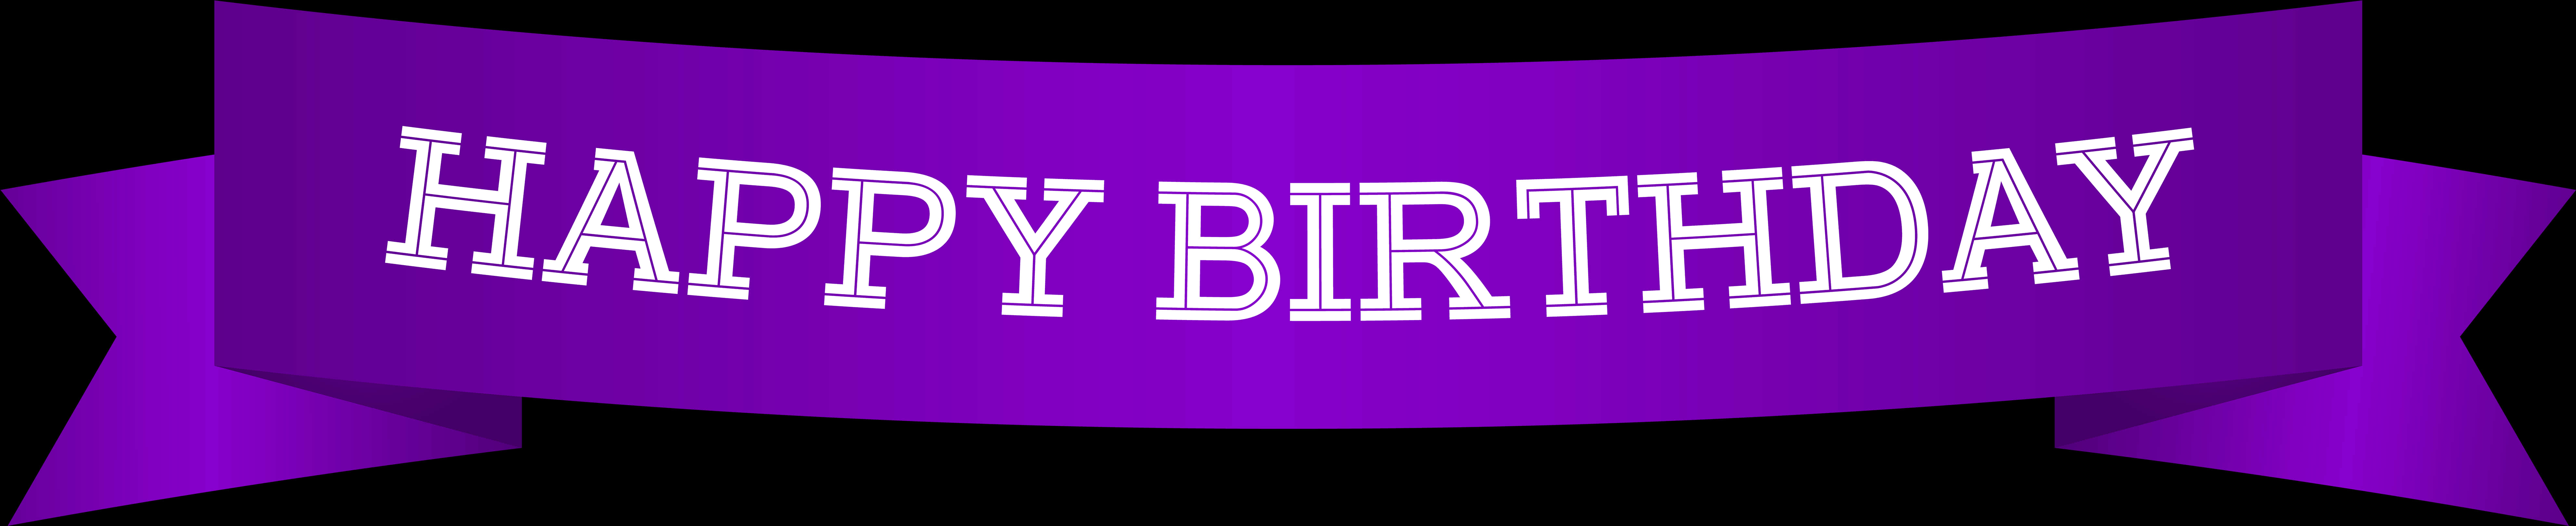 Purple Happy Birthday Banner PNG image